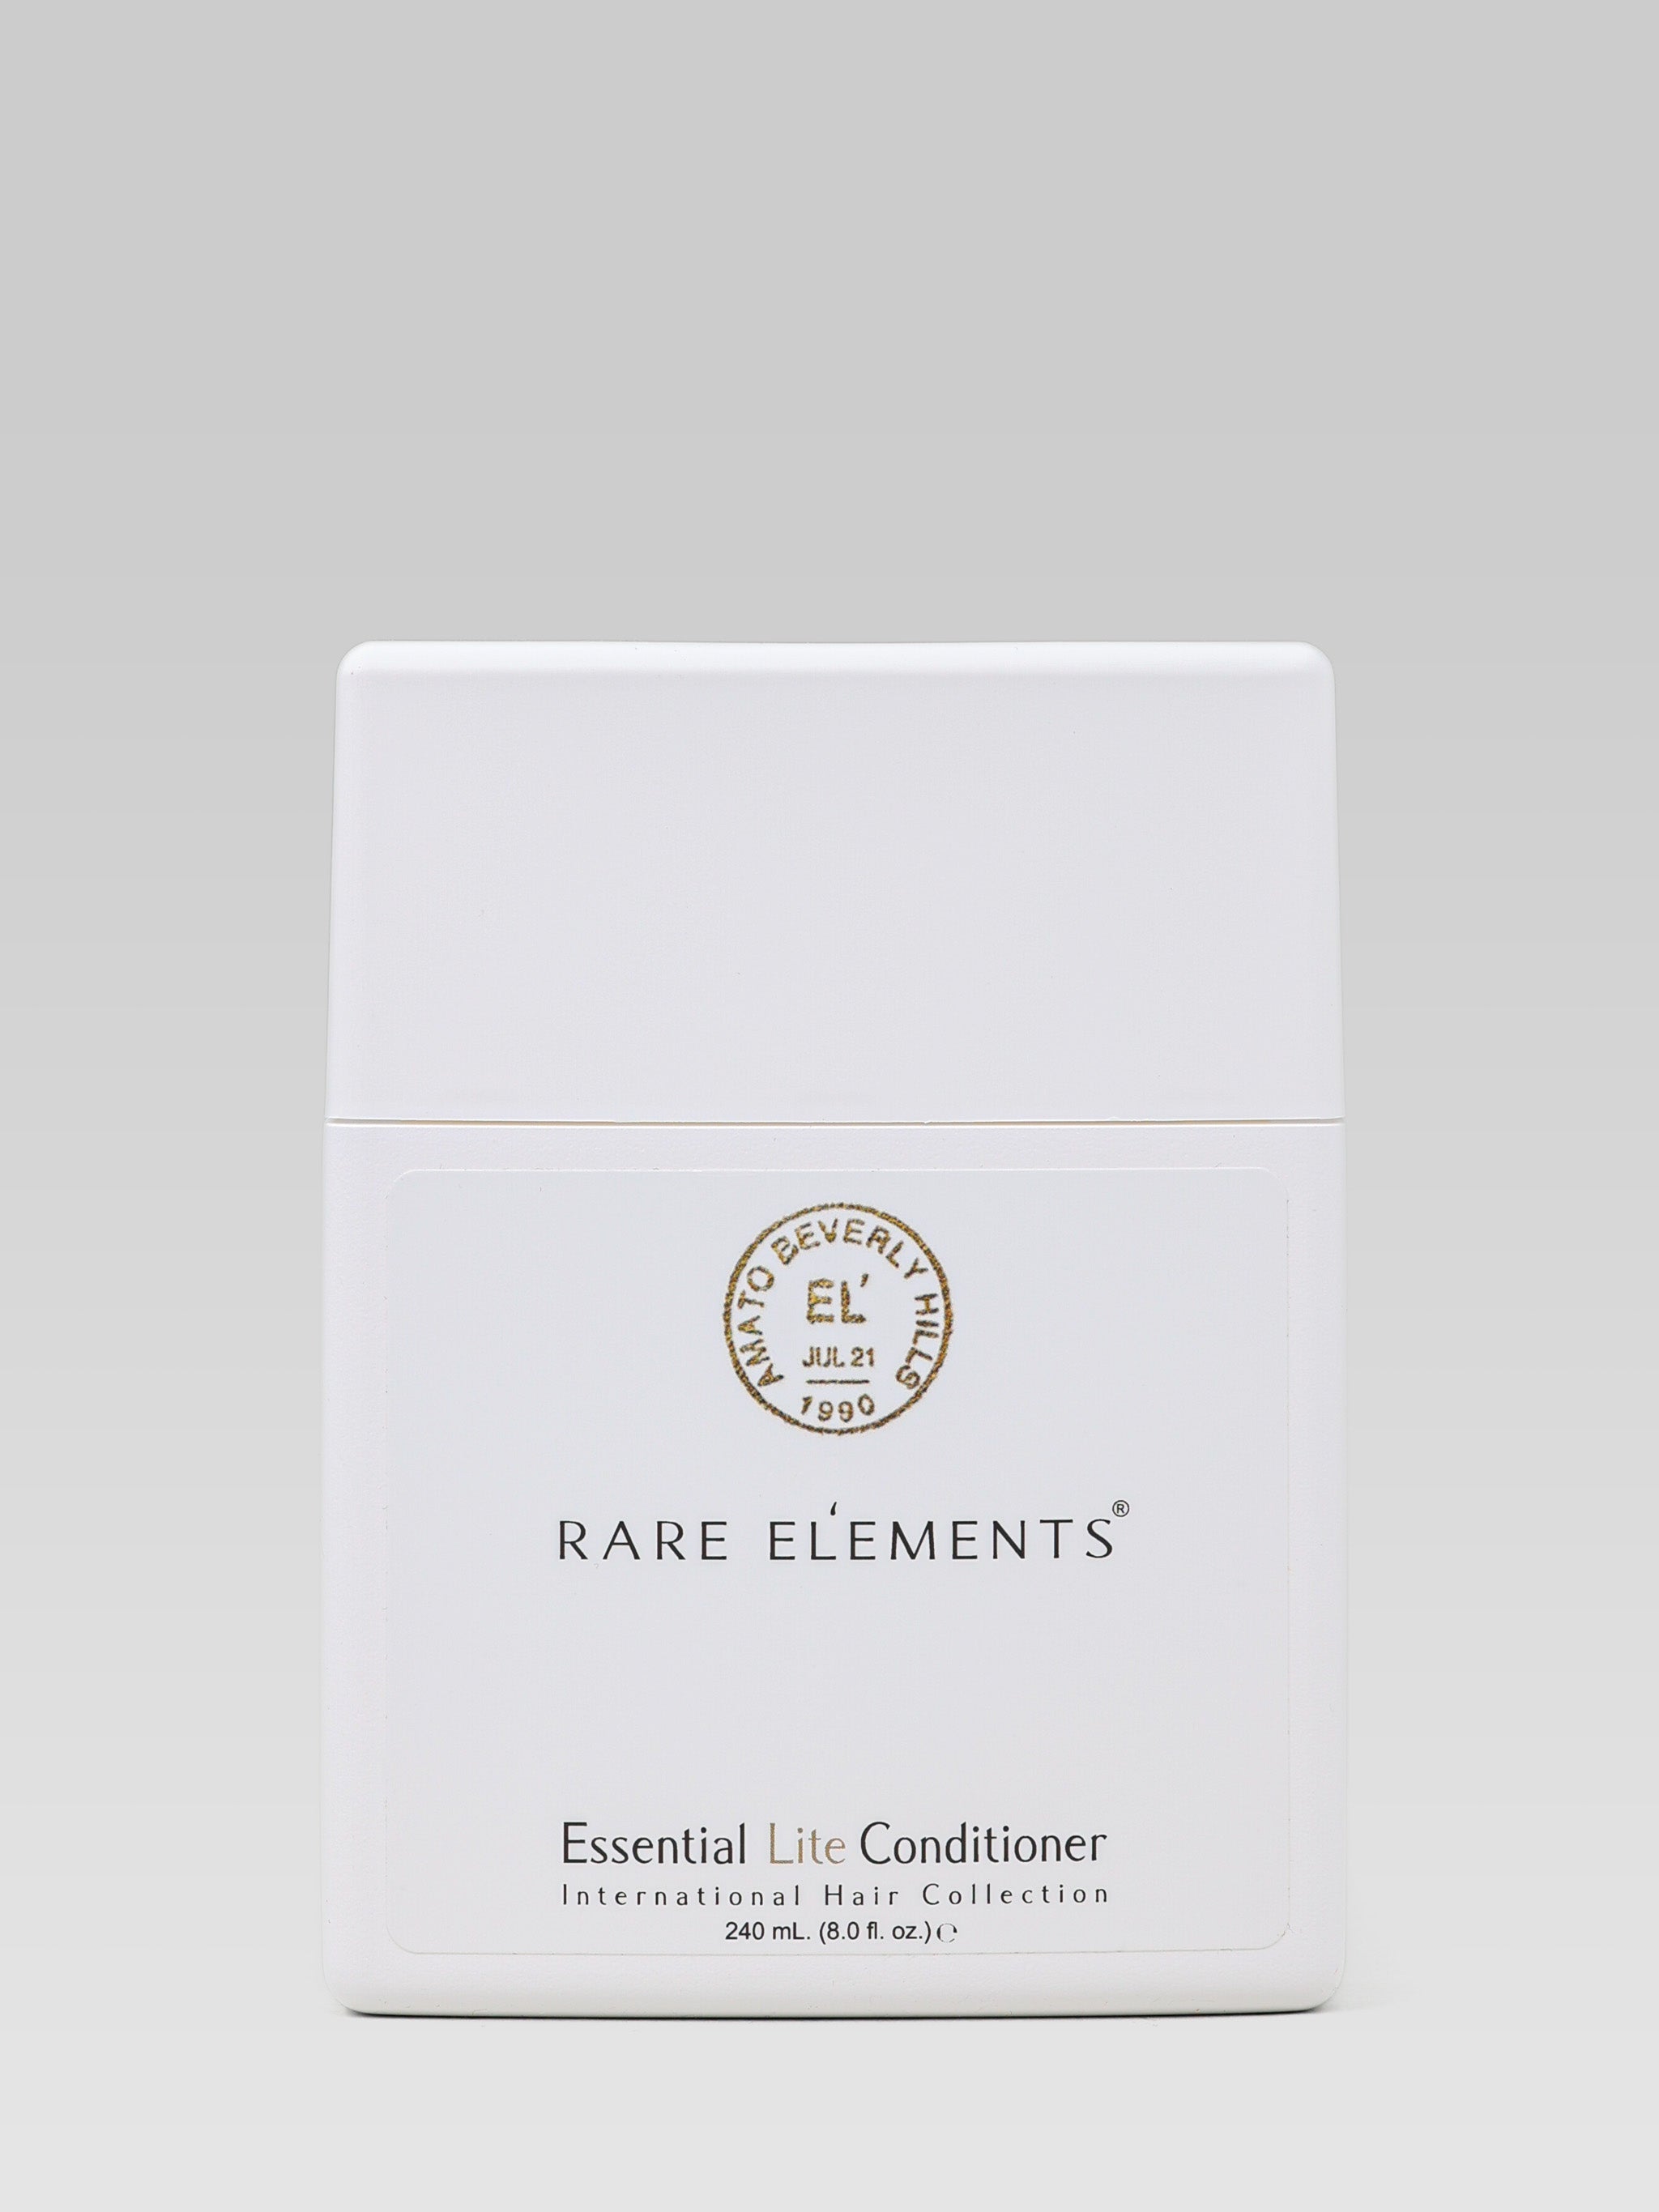 RARE EL’EMENTS Essential Lite Conditioner product shot